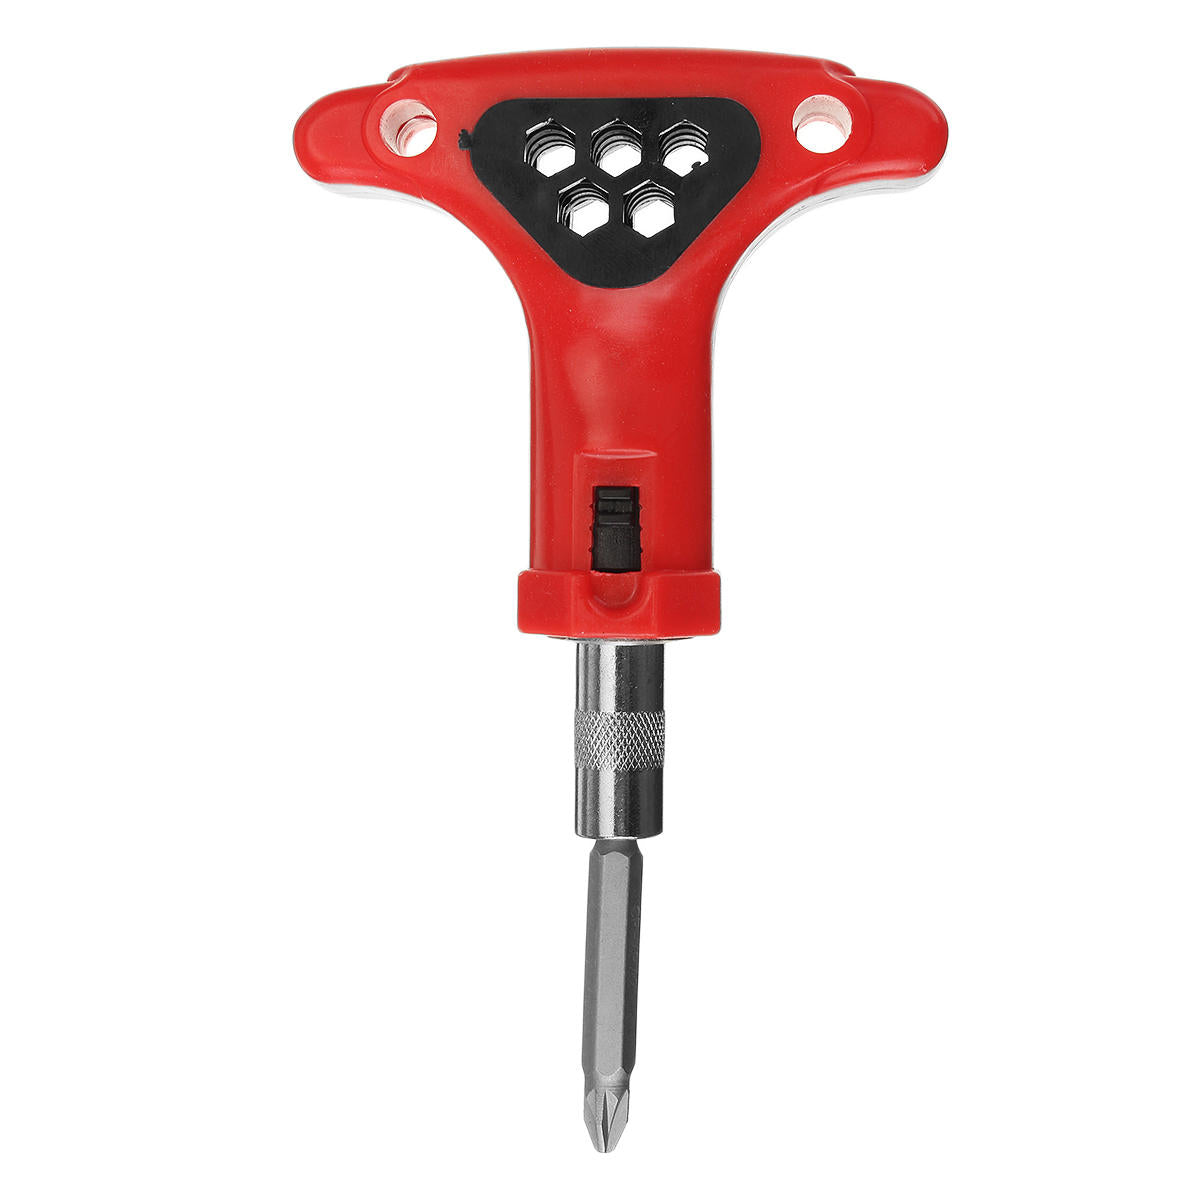 Ratchet Wrench Screwdriver Kit DIY Household Repair Tool Multi-functional Combination Toolkit